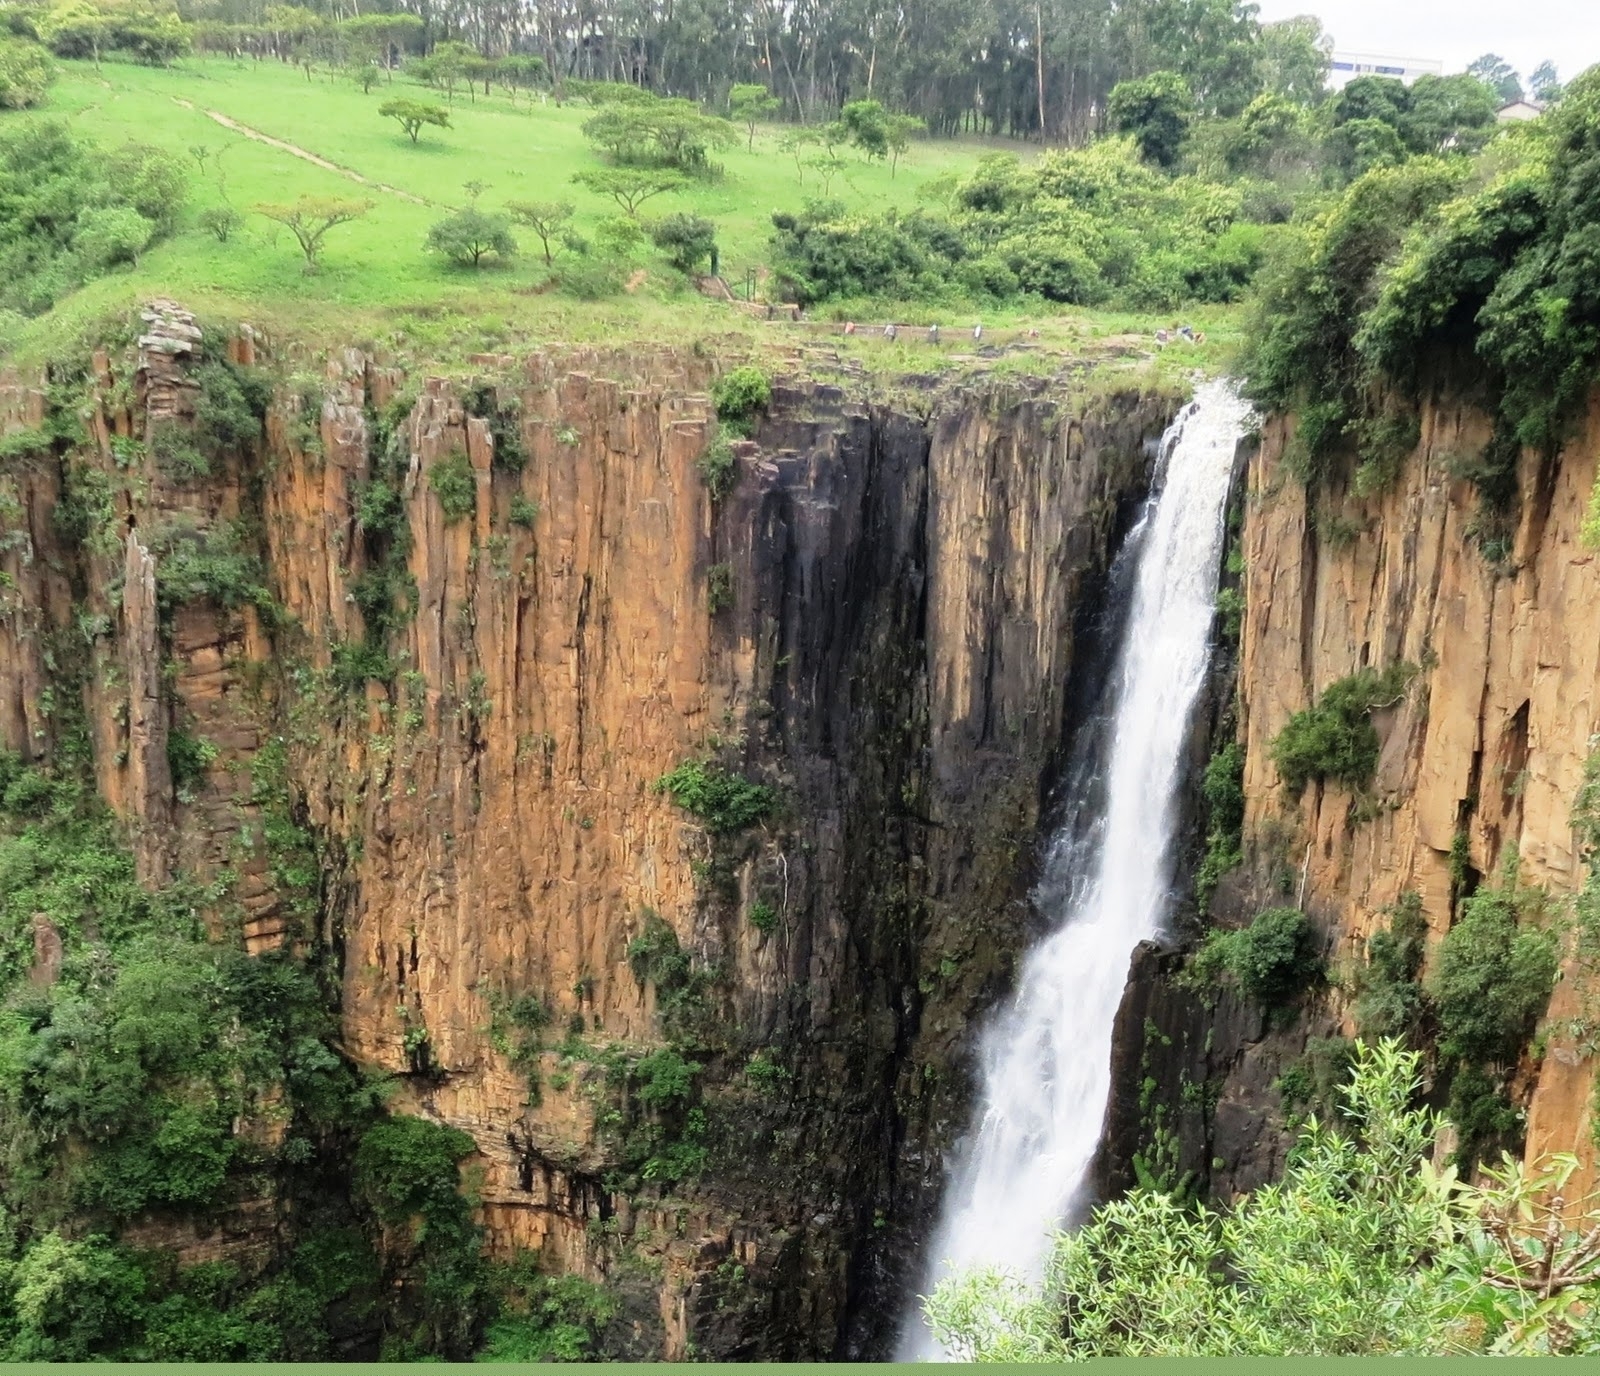 Howick Falls in Kwazulu Natal